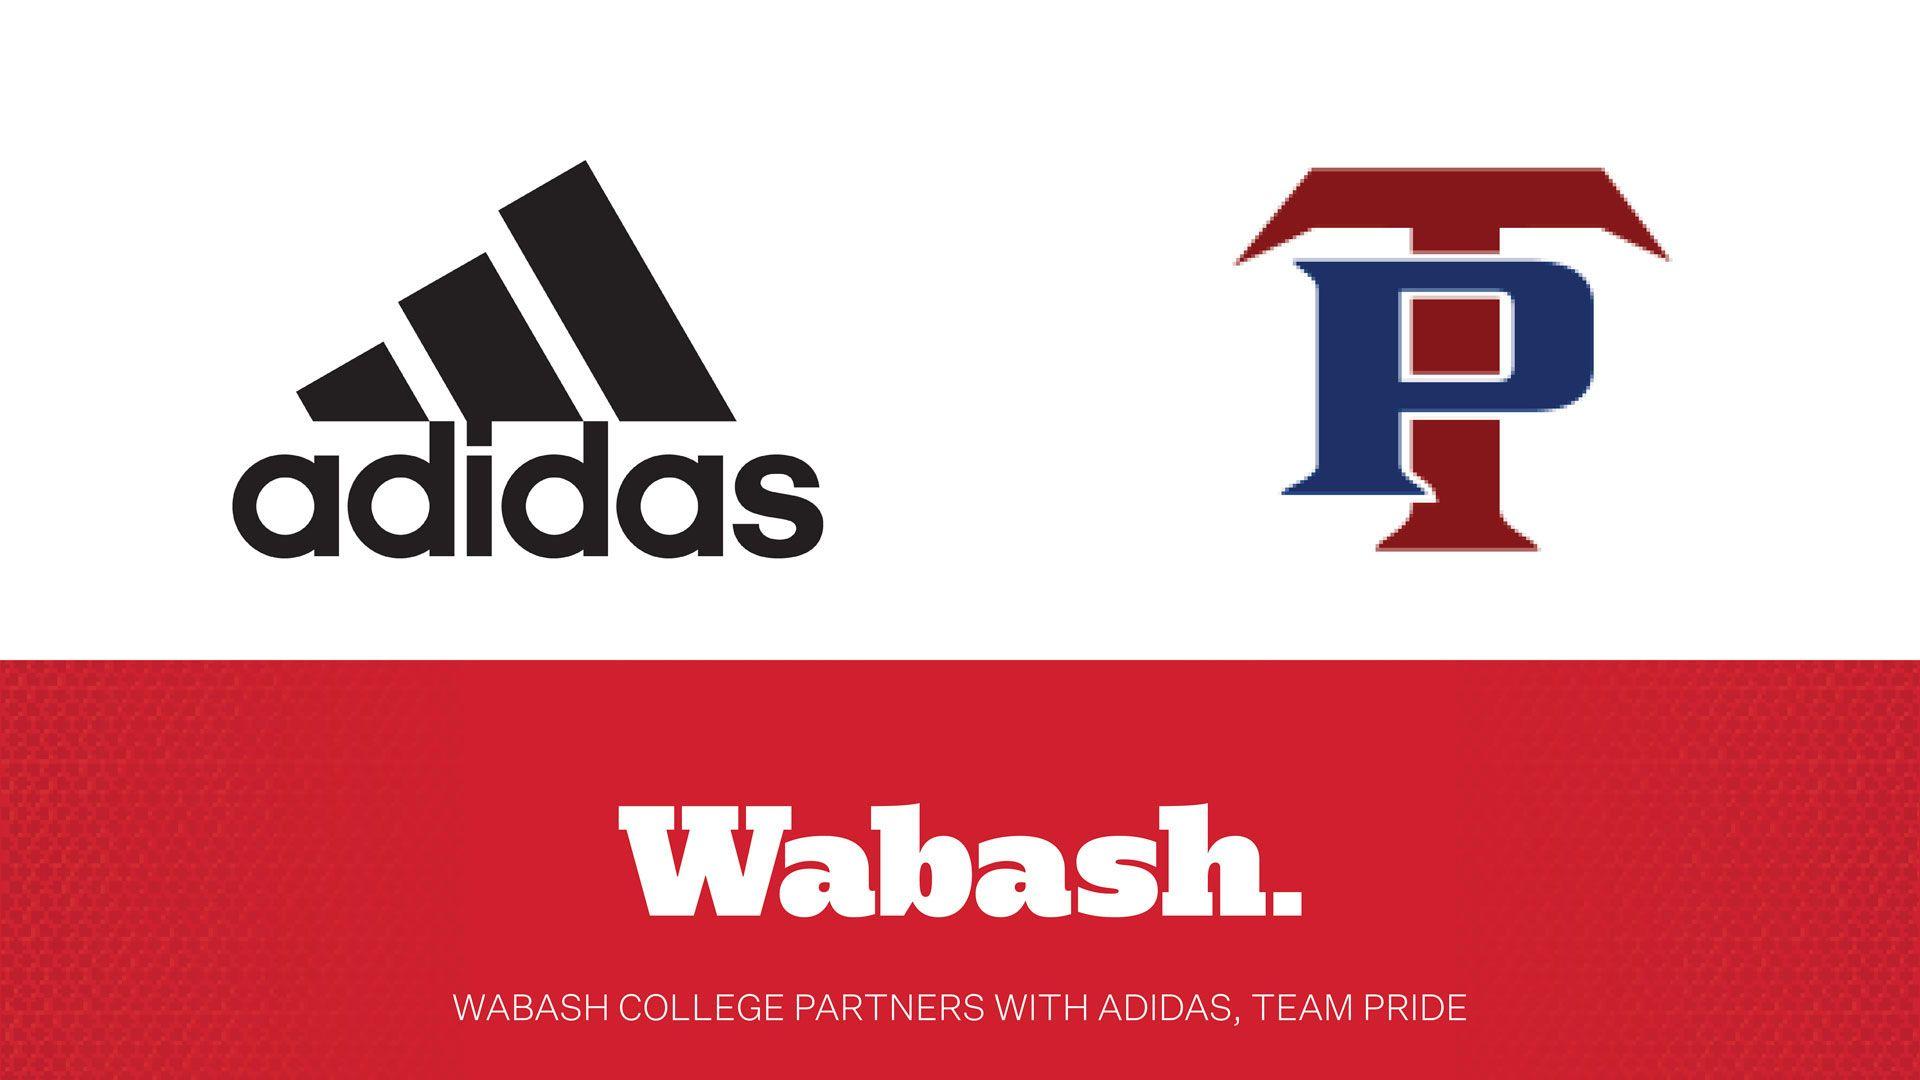 Wabash Logo - Wabash College Partners with Adidas, Team Pride College